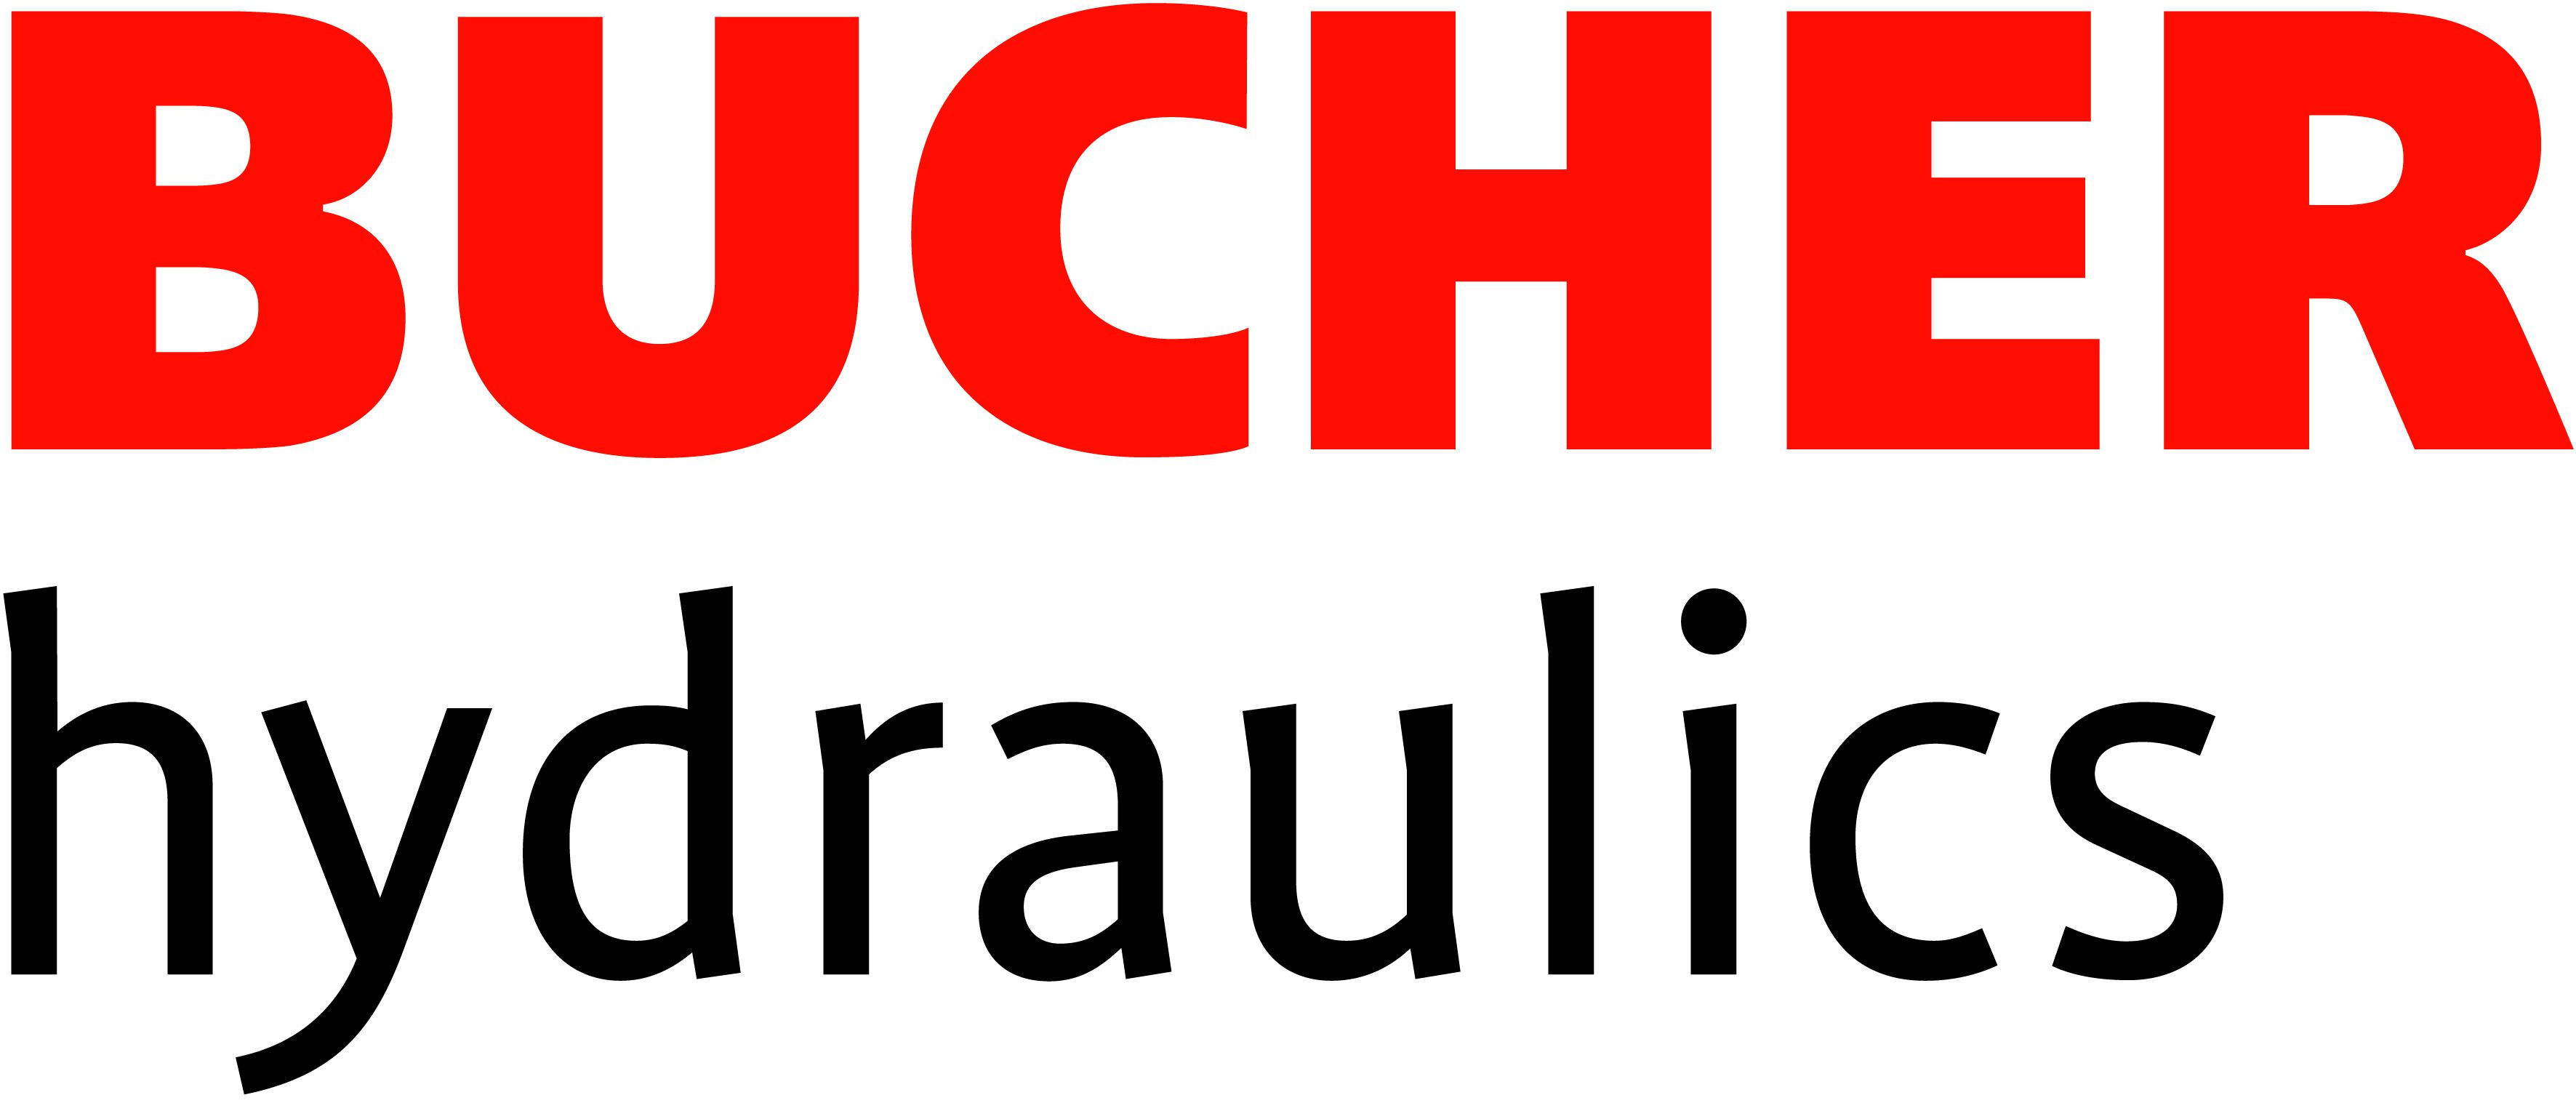 Buchner Hydraulics Erding GmbH